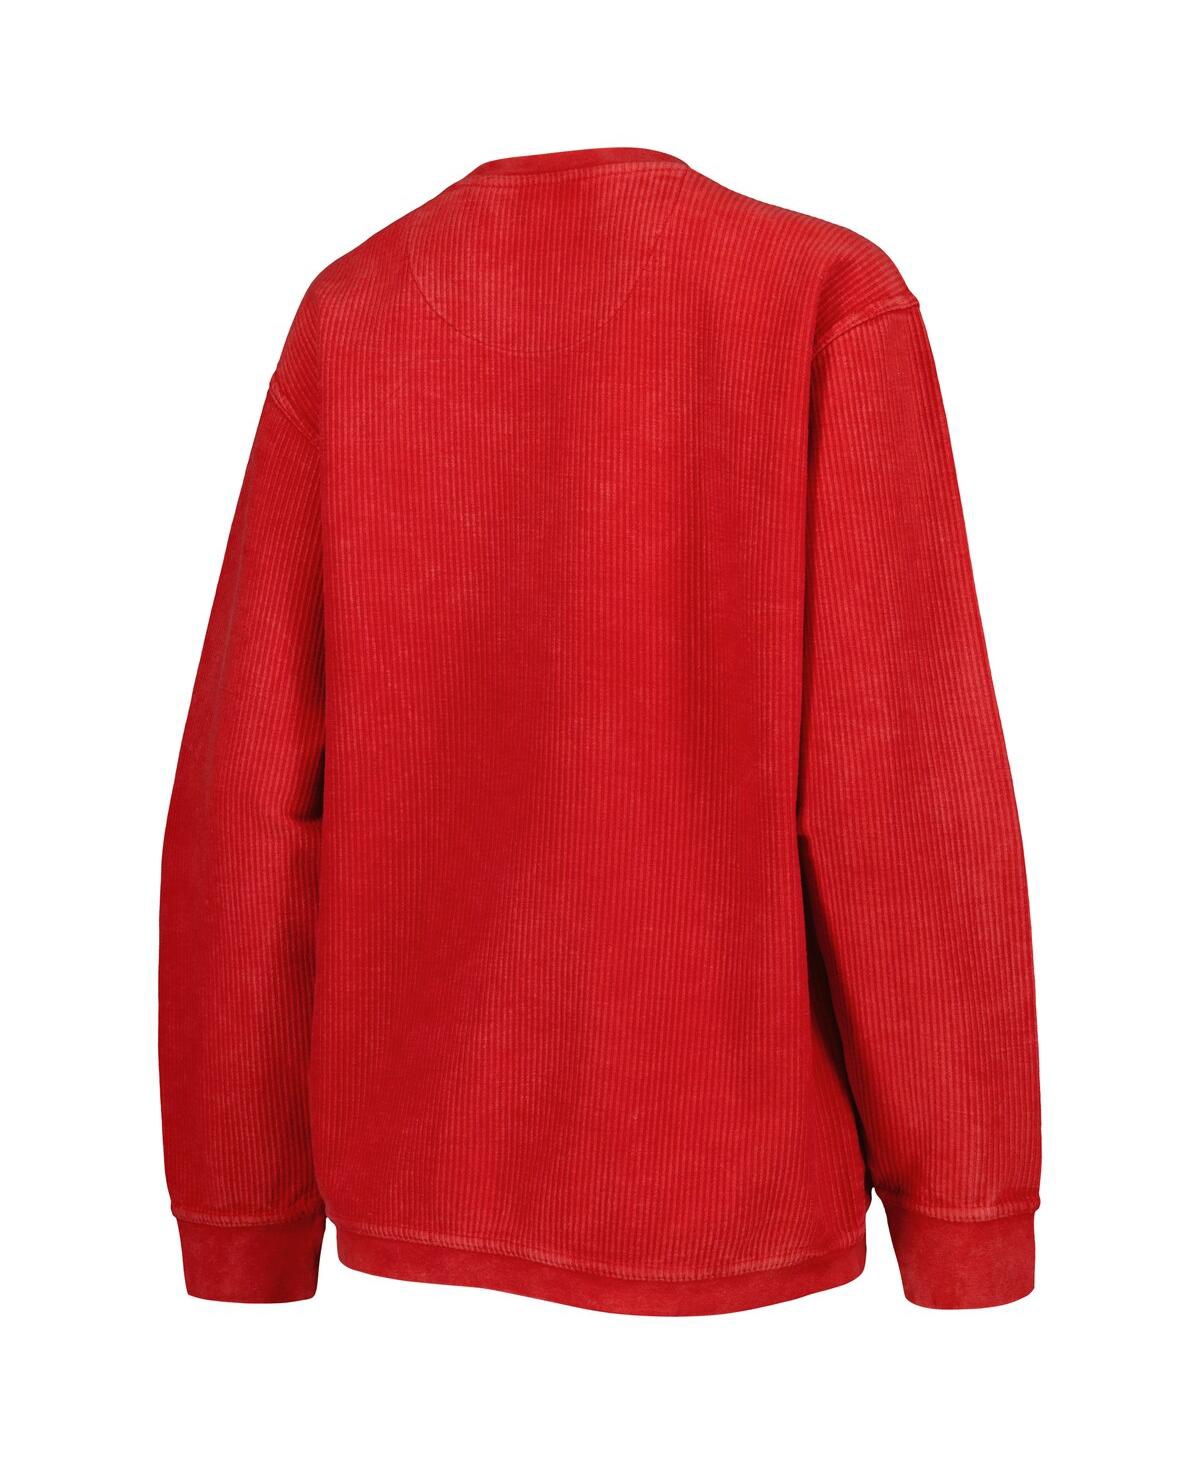 Shop Pressbox Women's  Red Cincinnati Bearcats Comfy Cord Vintage-like Wash Basic Arch Pullover Sweatshirt